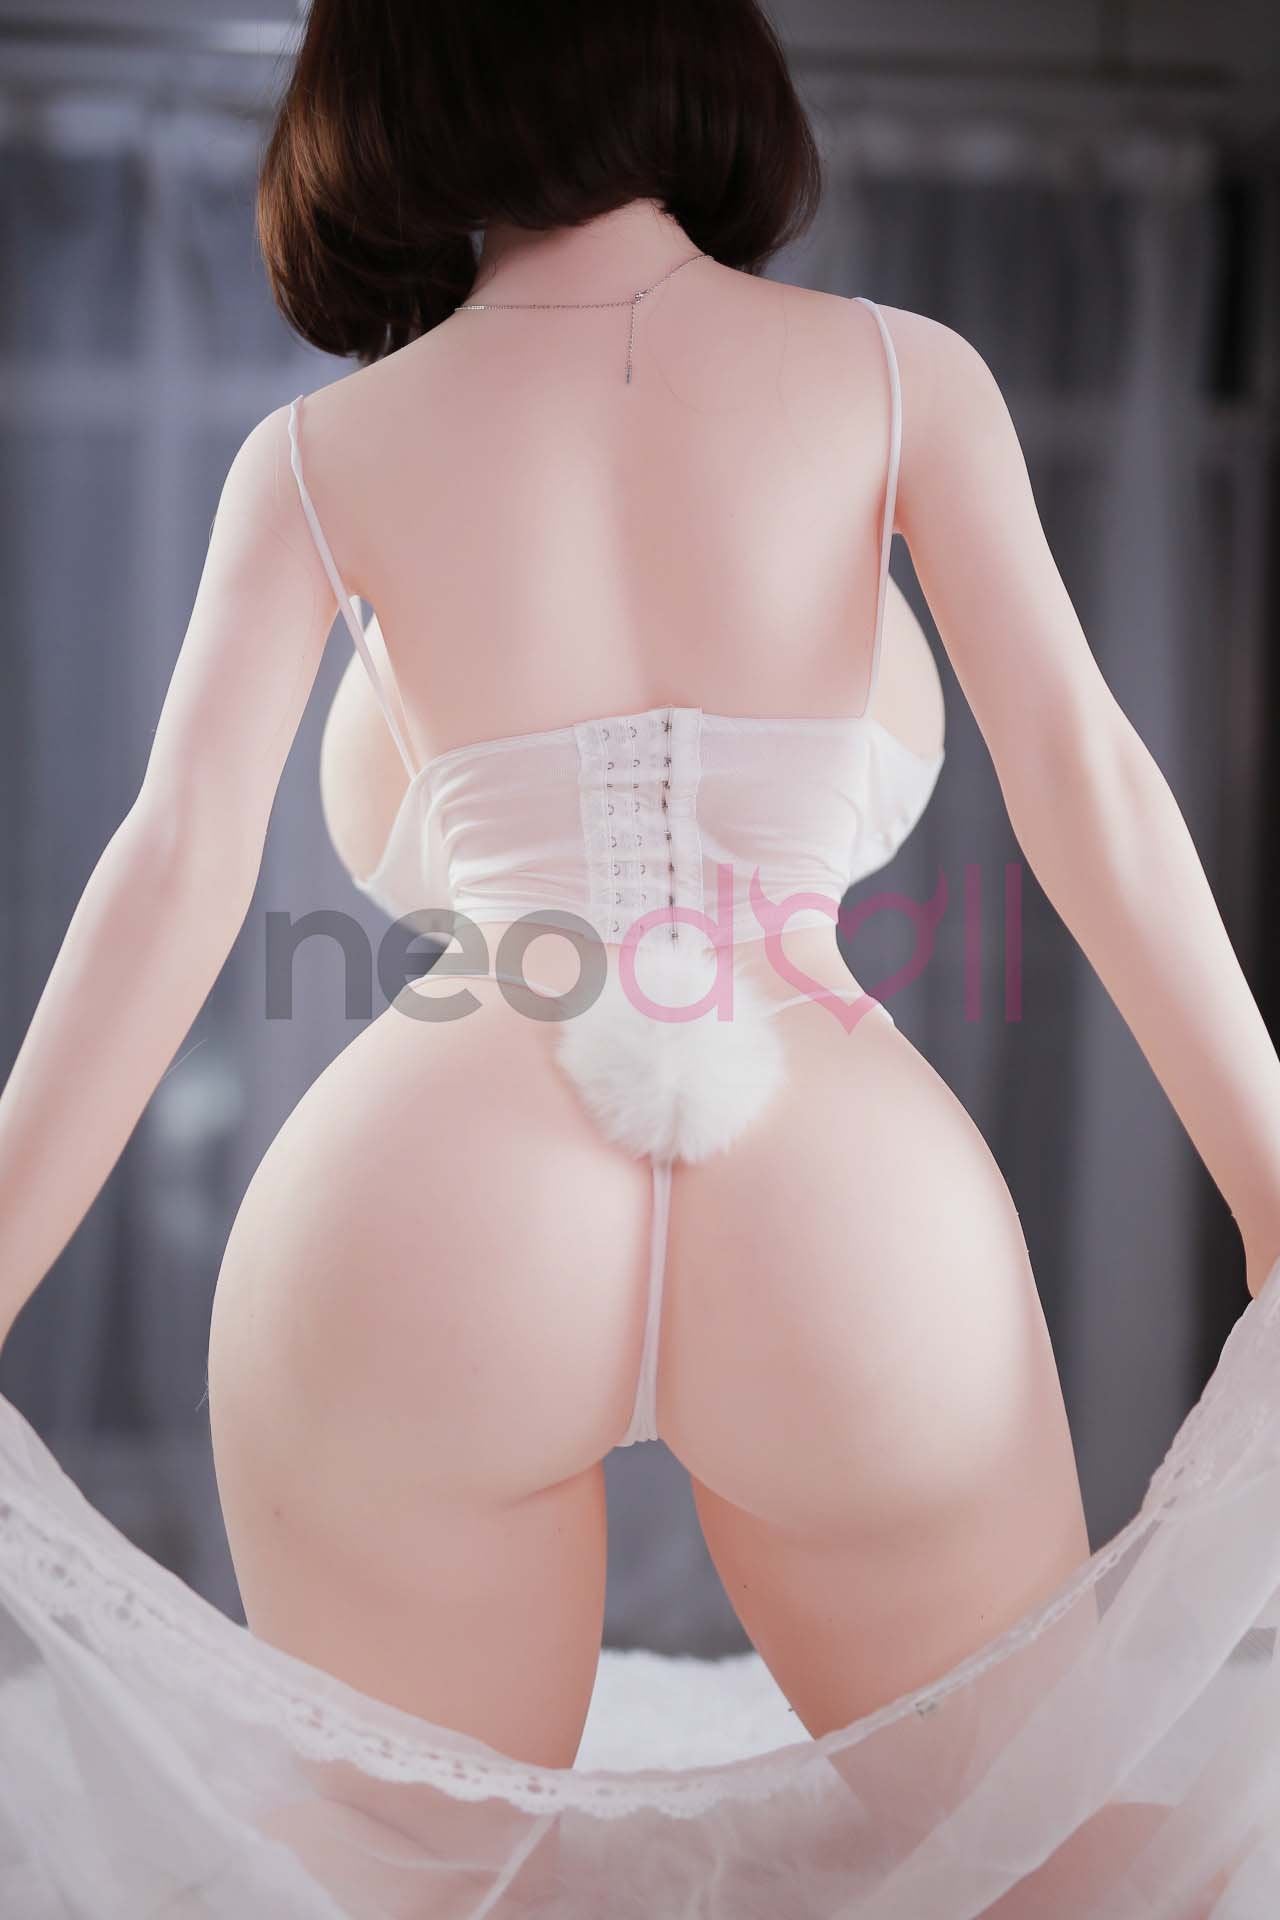 Neodoll Sugar Babe - Anxi - Realistic Sex Doll - Gel Breast - Uterus - 159cm - White